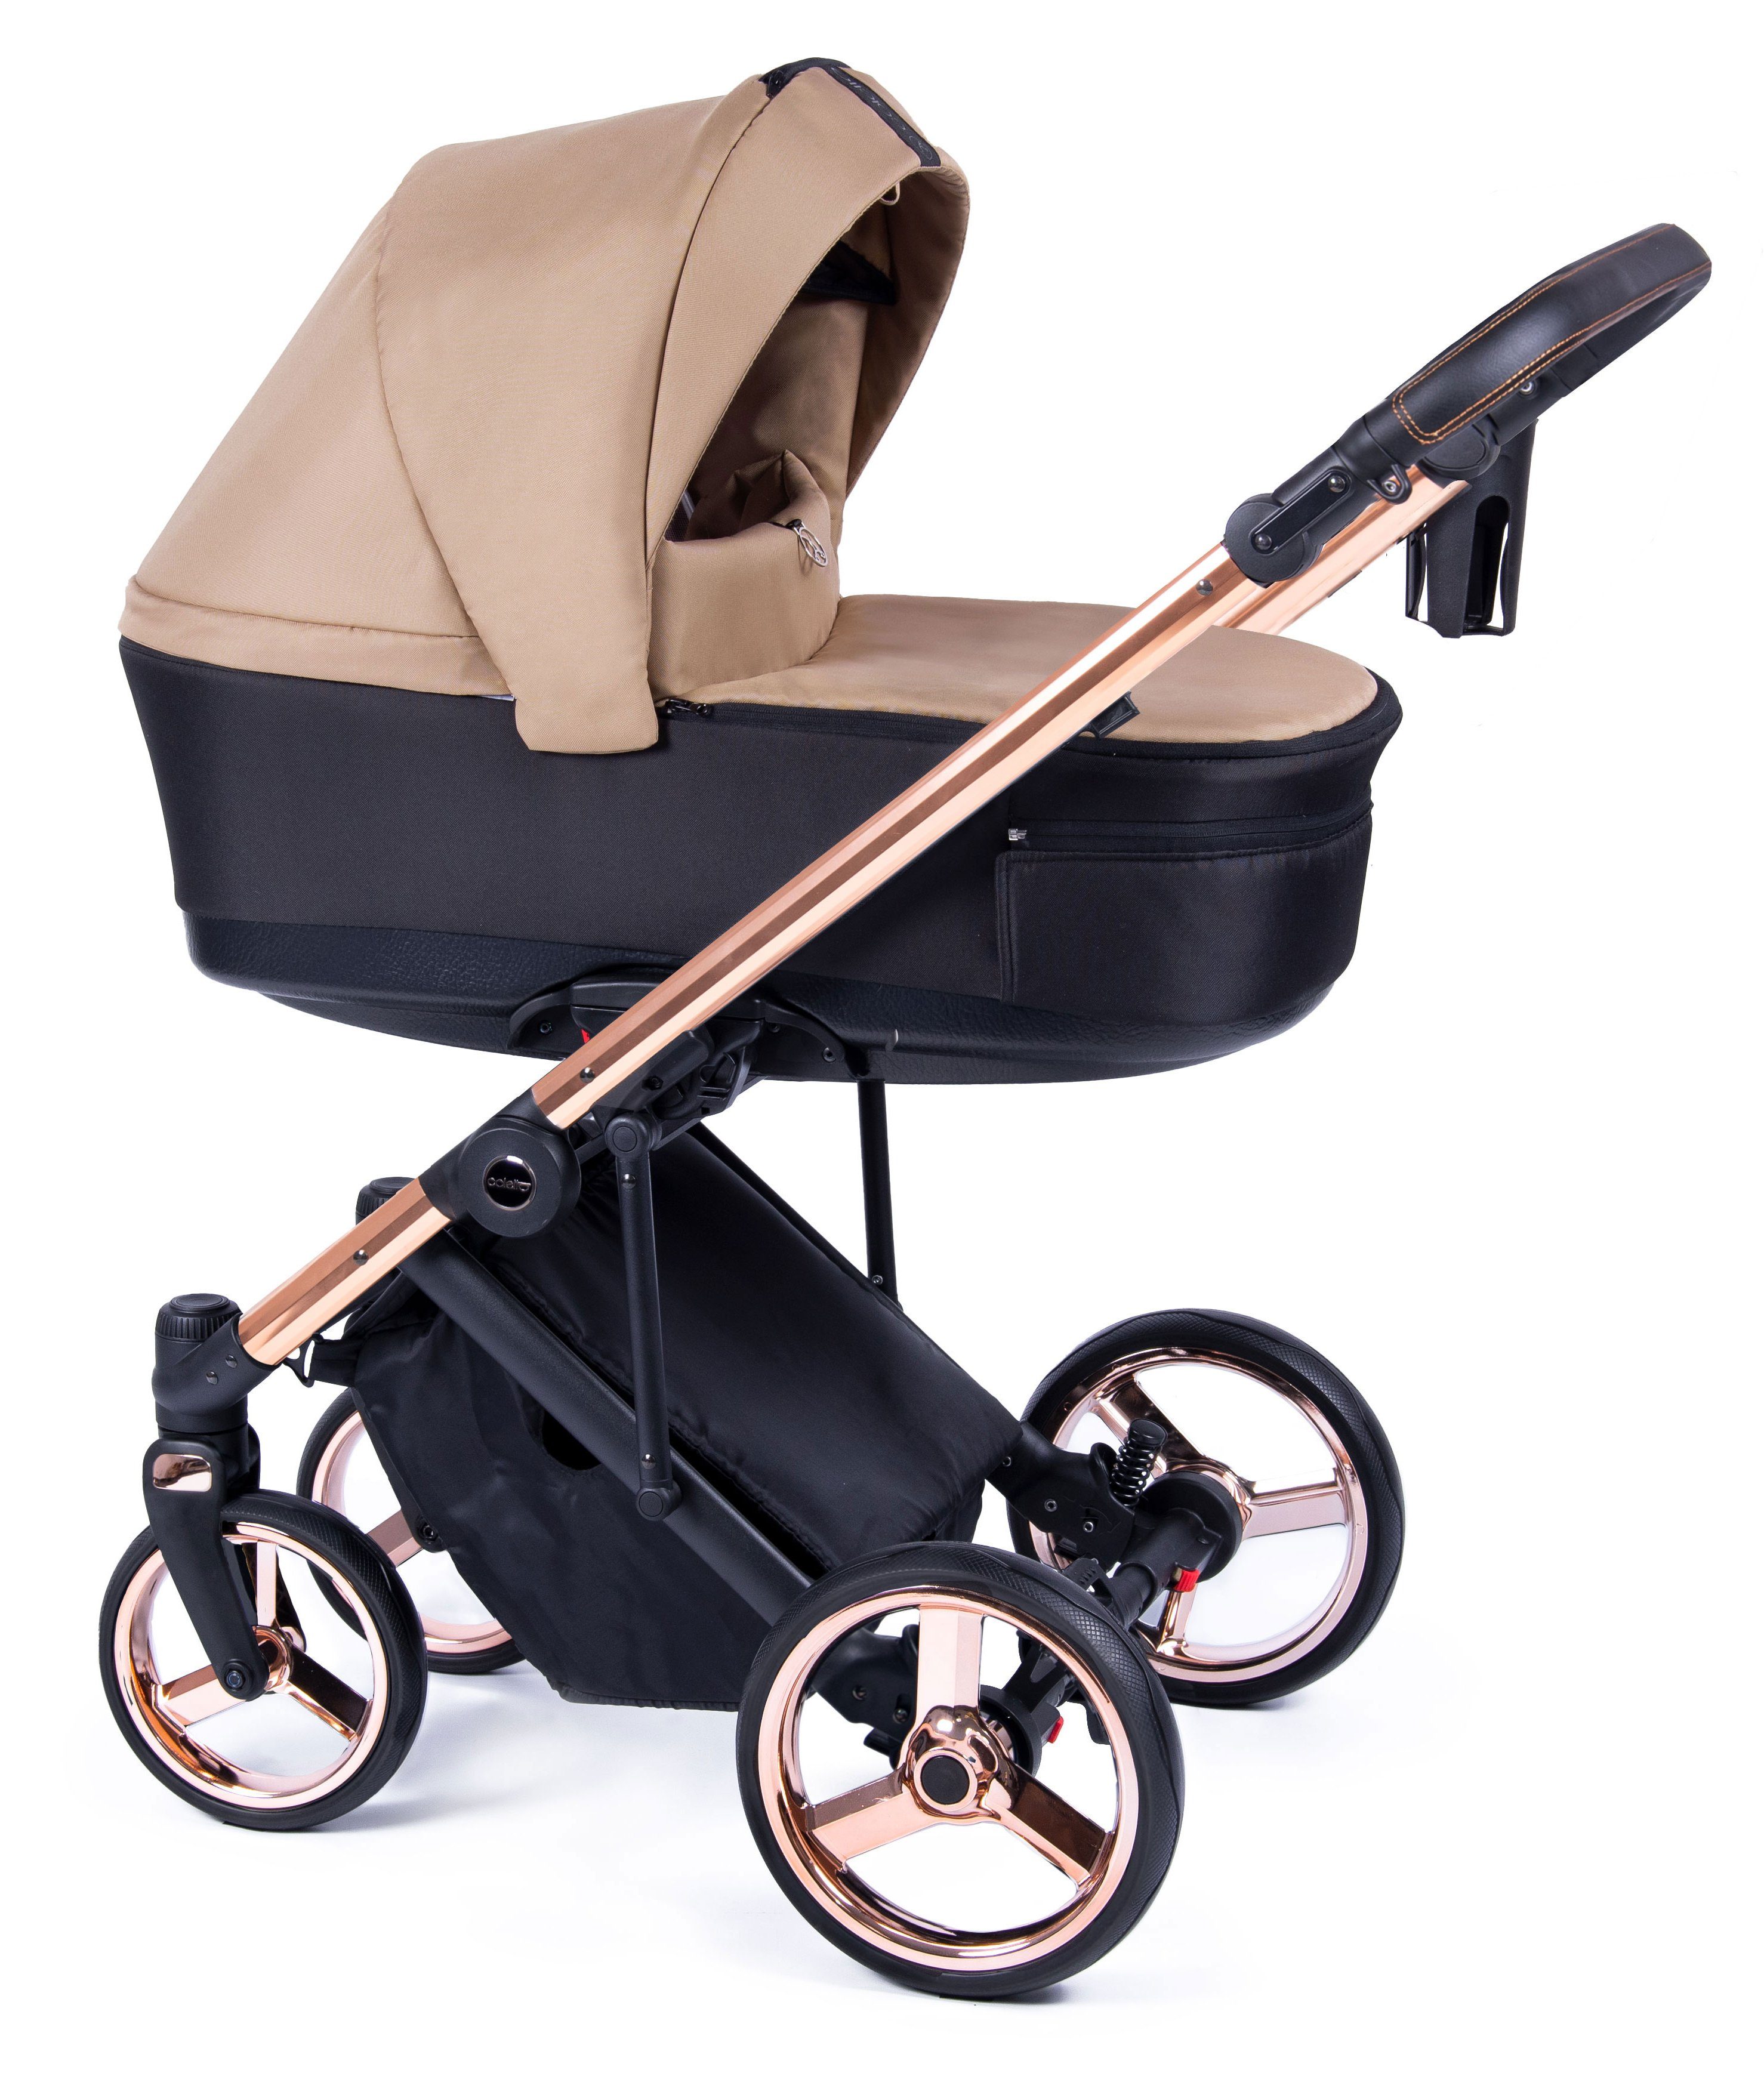 babies-on-wheels Kombi-Kinderwagen 2 Gestell Fado Designs Braun = Teile - 14 gold in in 1 - Kinderwagen-Set 24